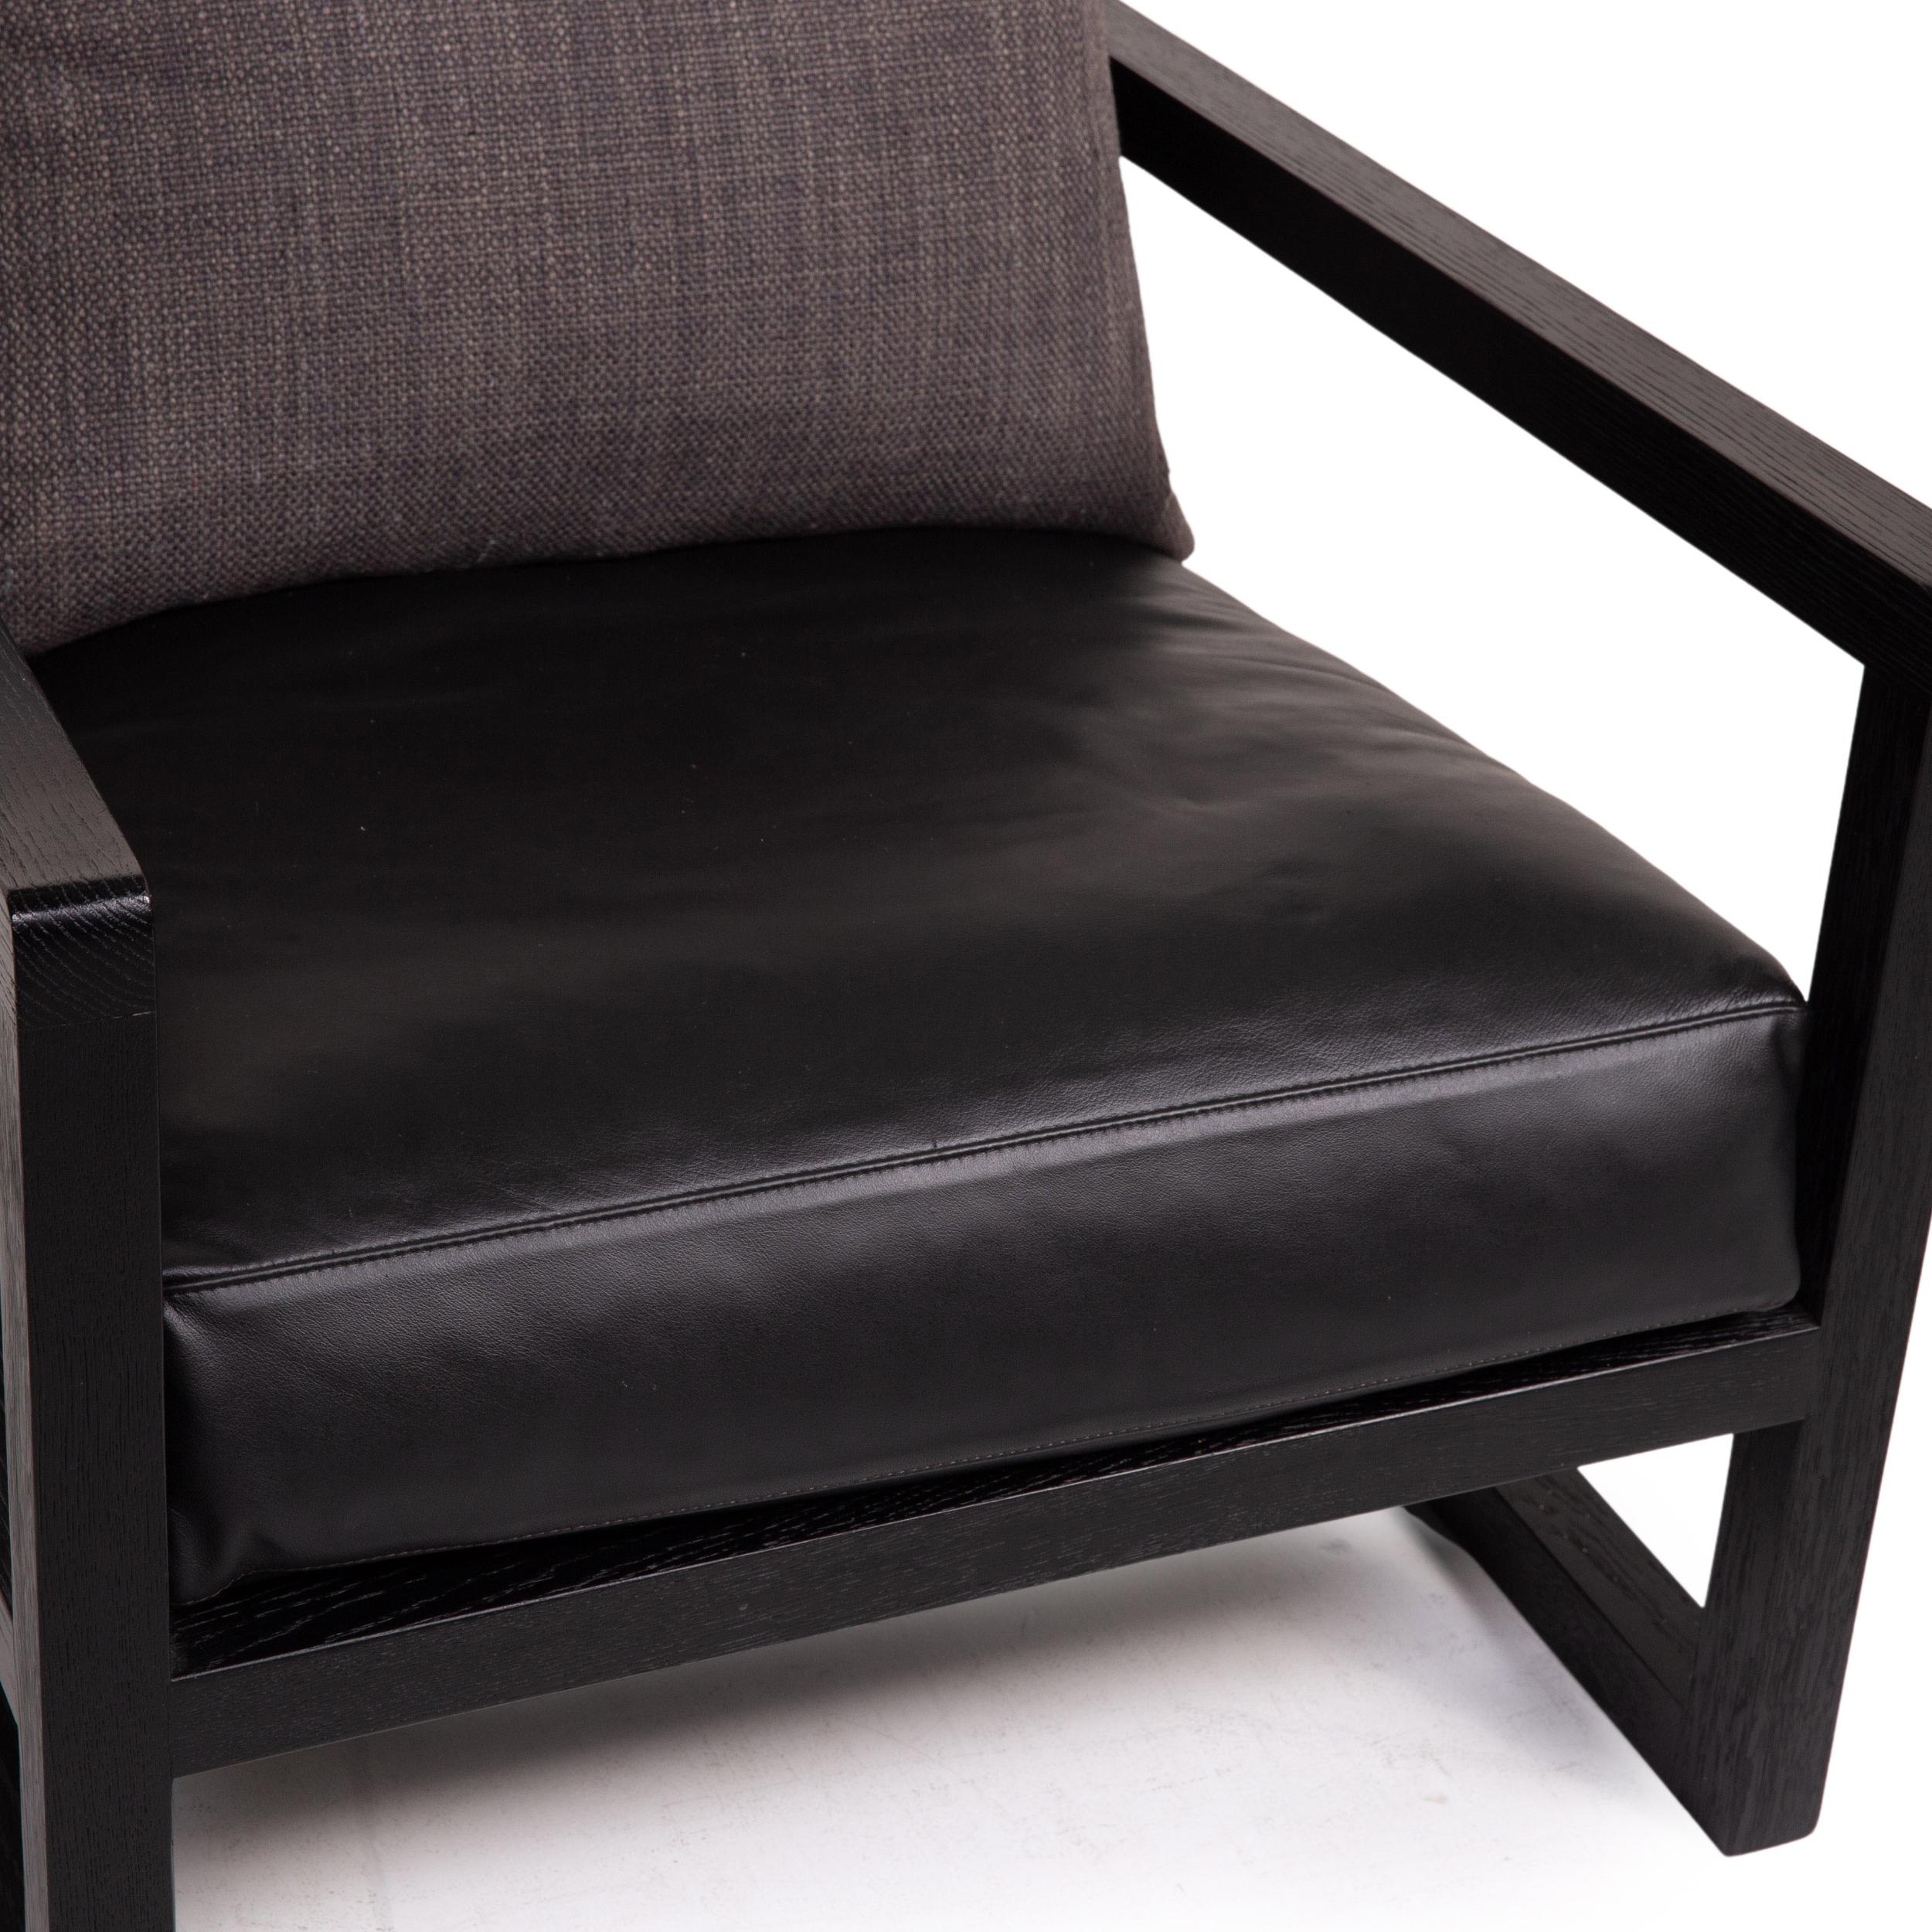 Italian B&B Italia Simplice Leather Fabric Armchair Set Black 2x Chair